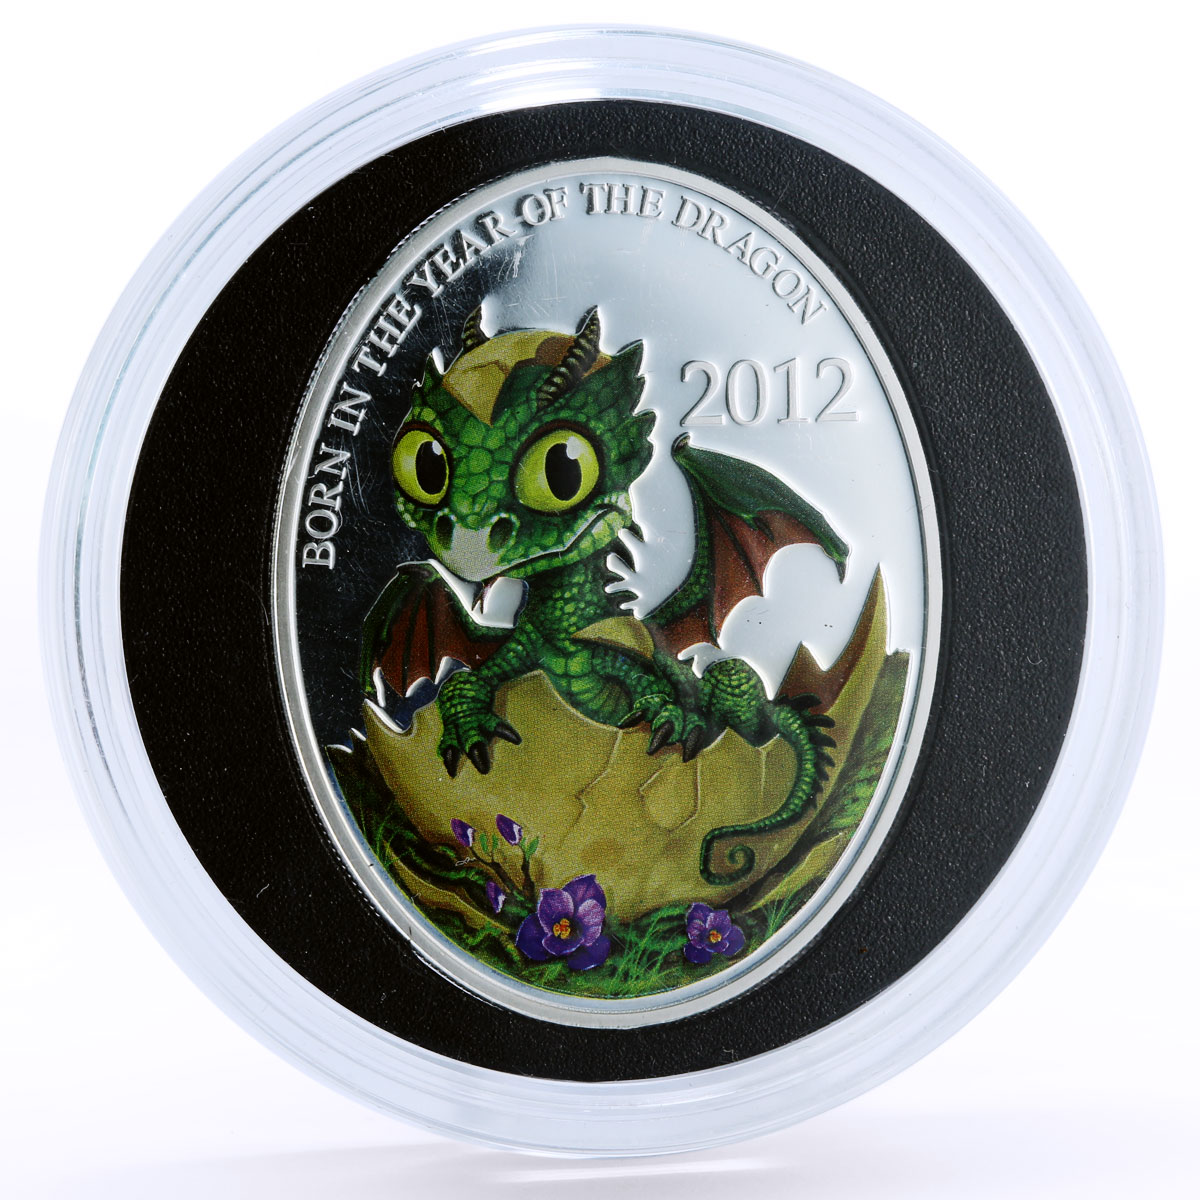 Niue 1 dollar Lunar Calendar series Year of the Dragon colored silver coin 2012